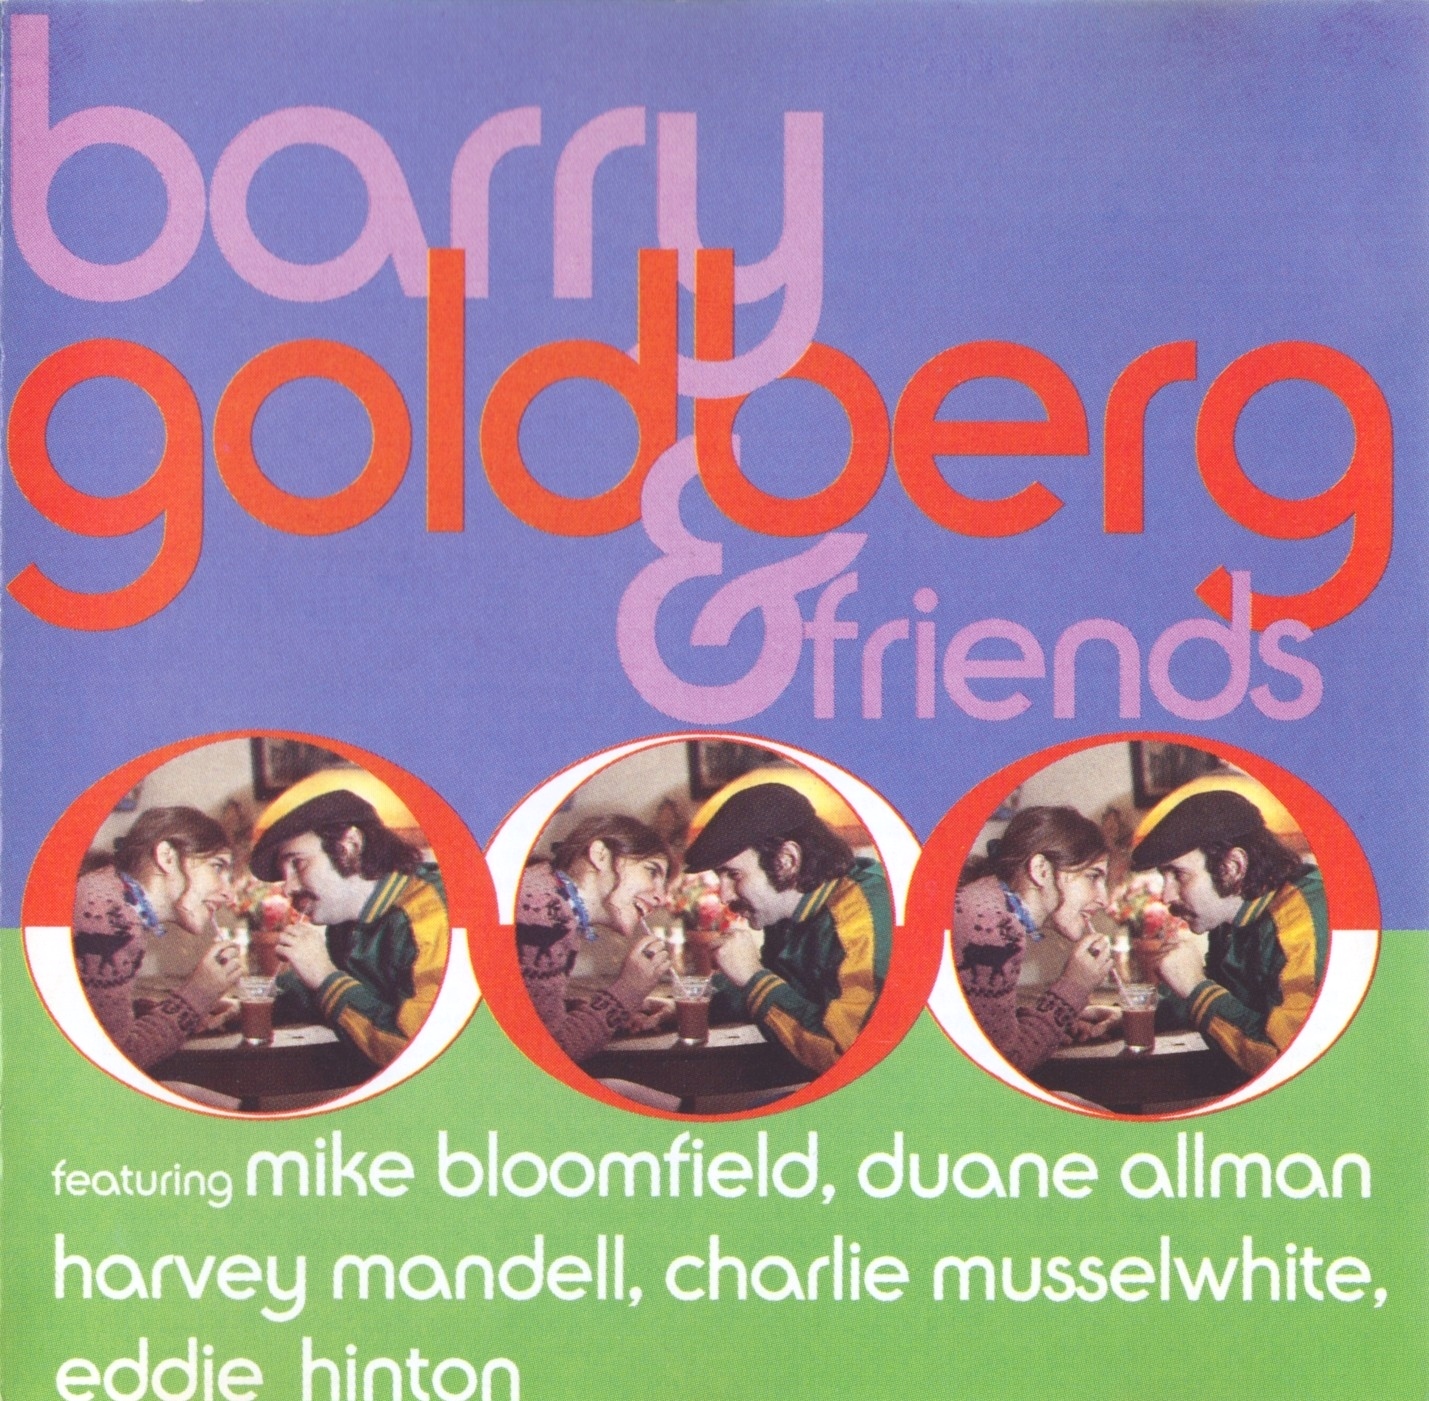 Barry Goldberg - Barry Goldberg & Friends